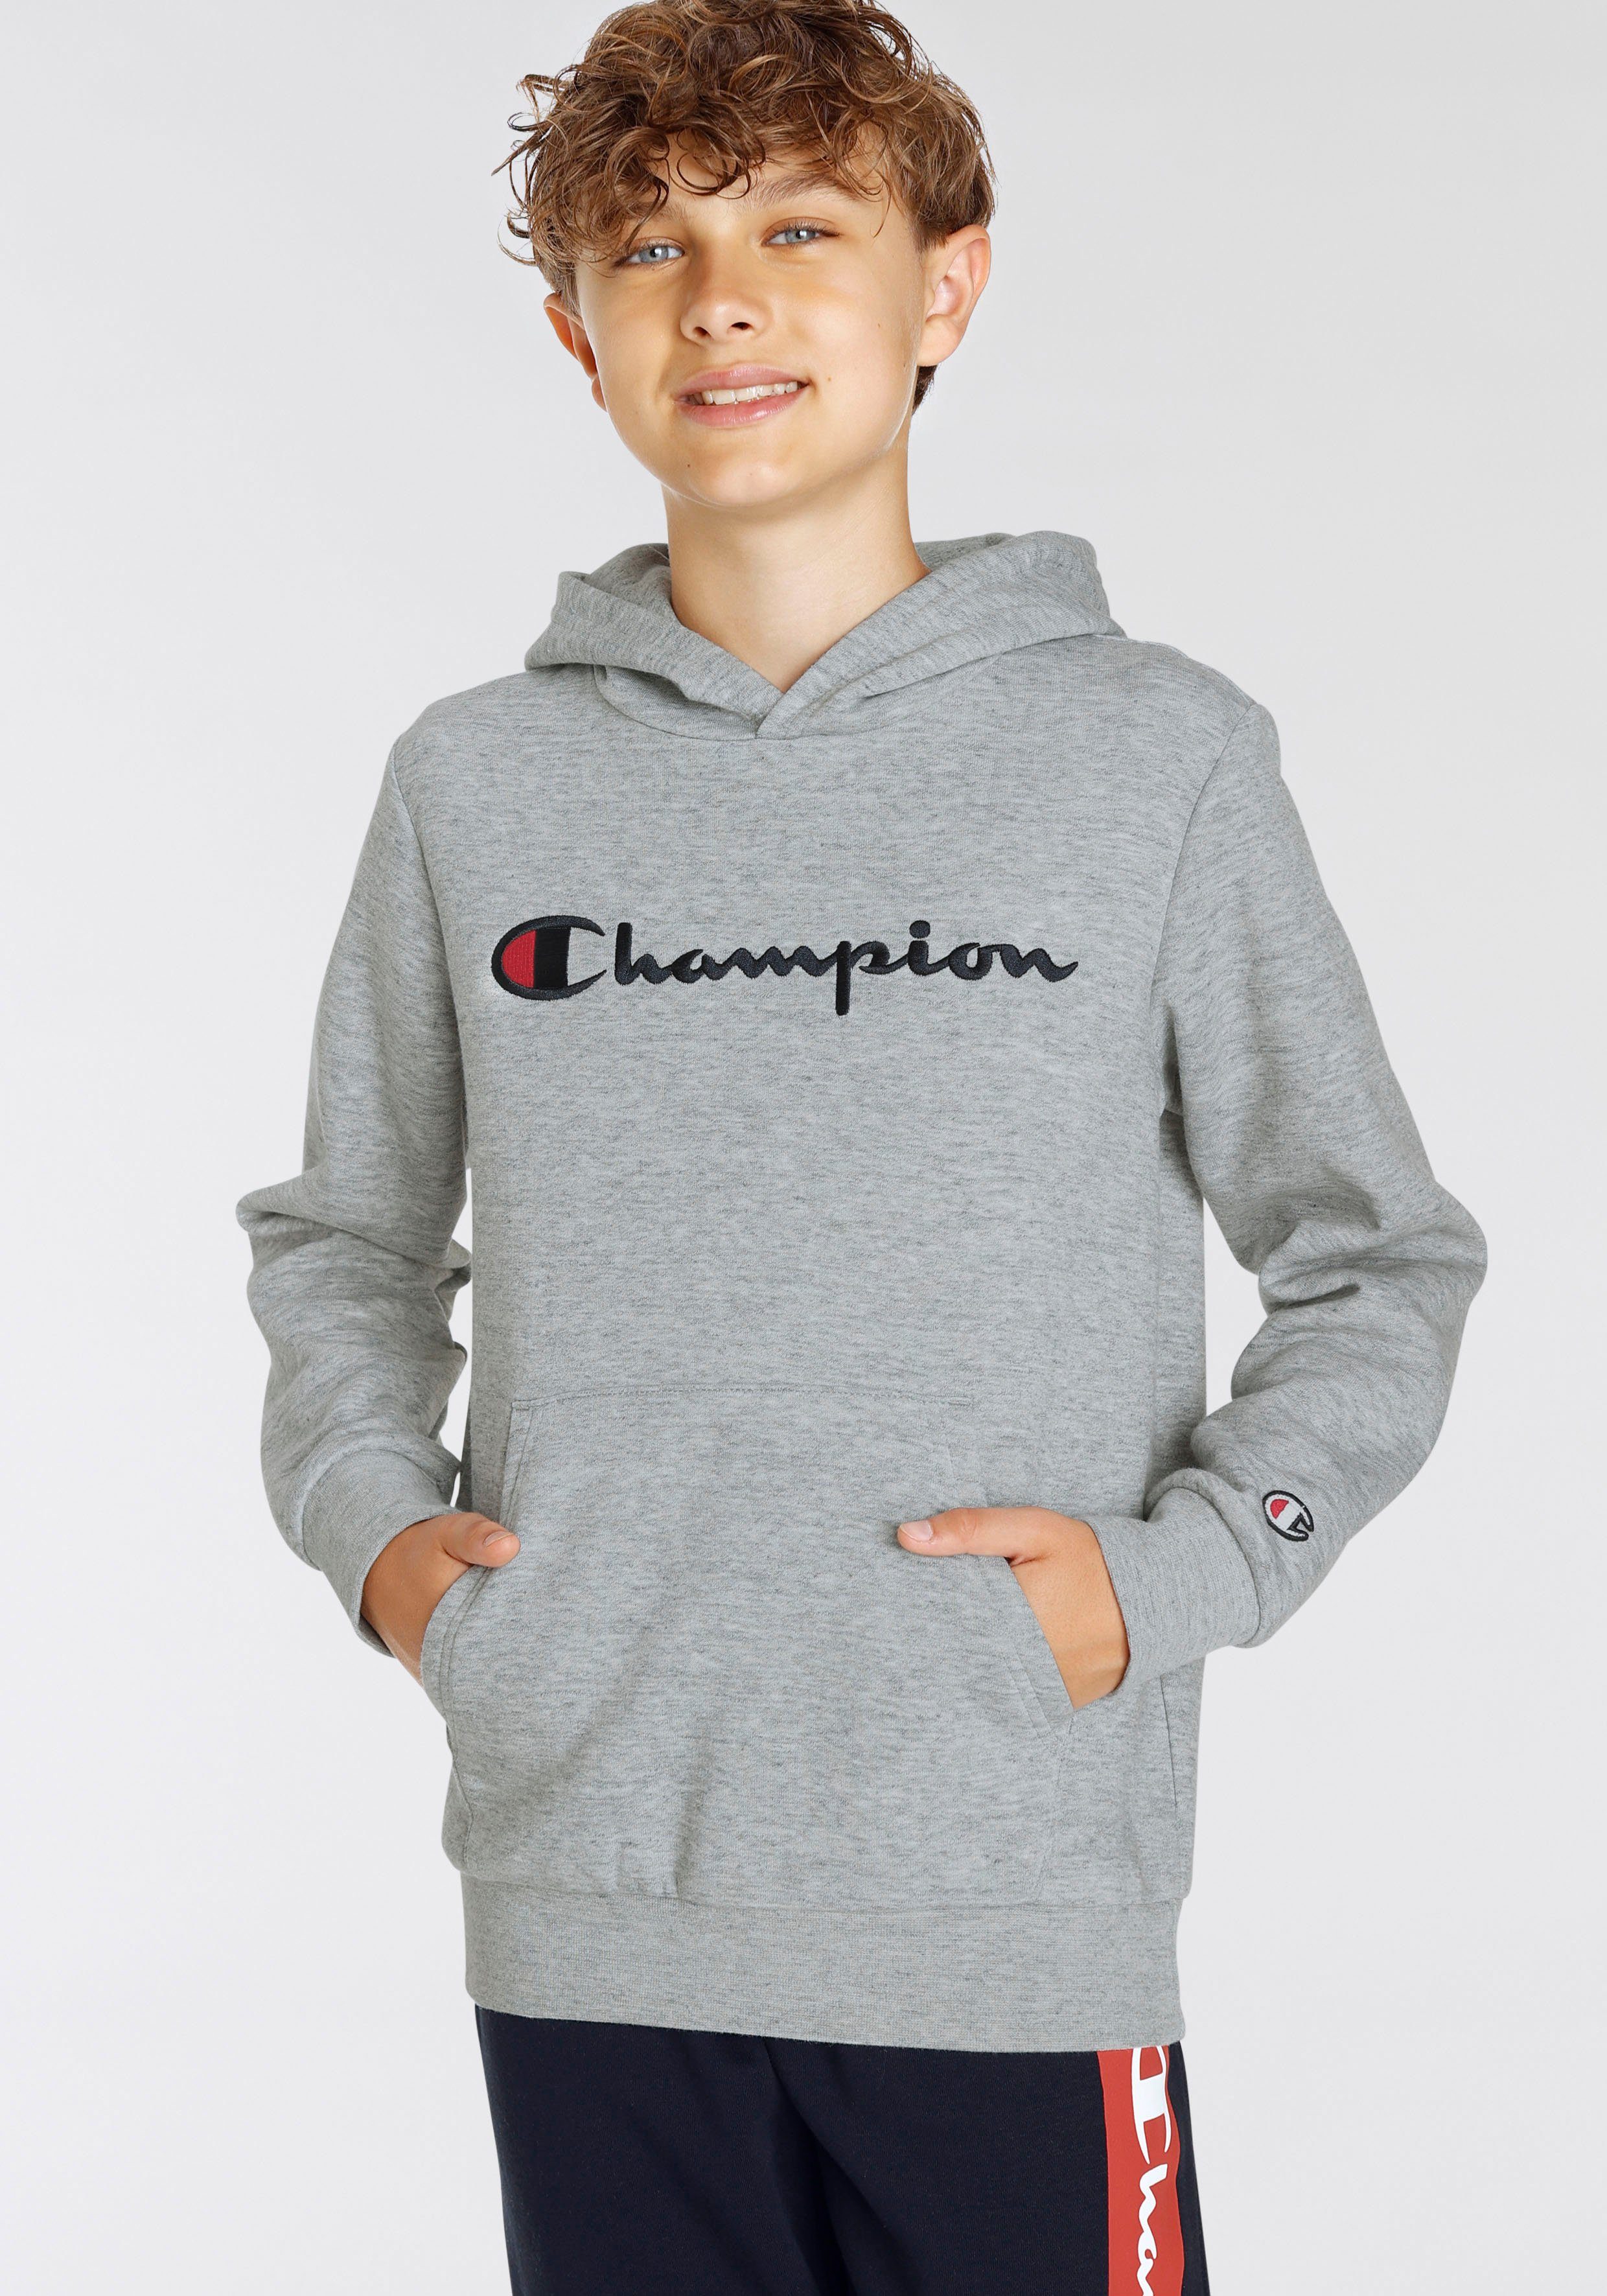 Logo Champion 2 Kinder Sweatshirt grau - Sweatshirt für Classic large Hooded